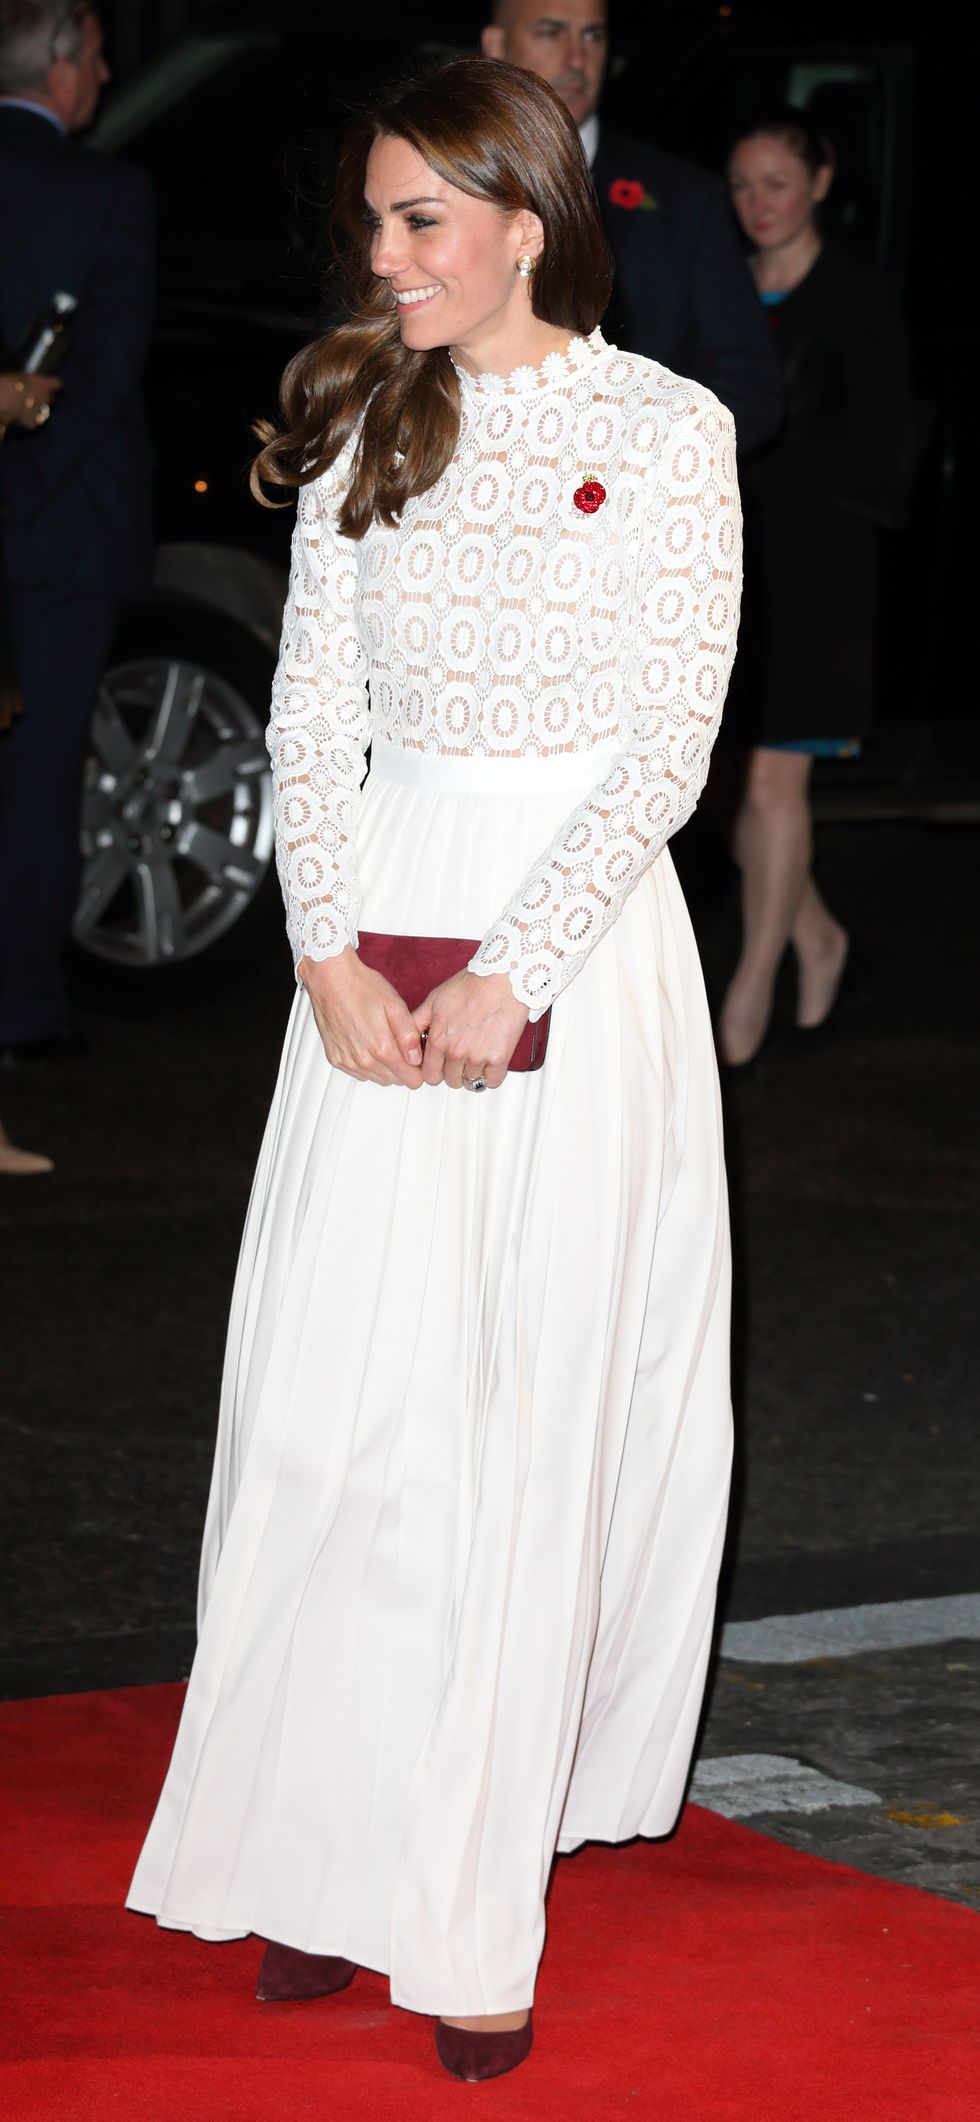 Kate Middleton wearing Self Portrait at a film premiere